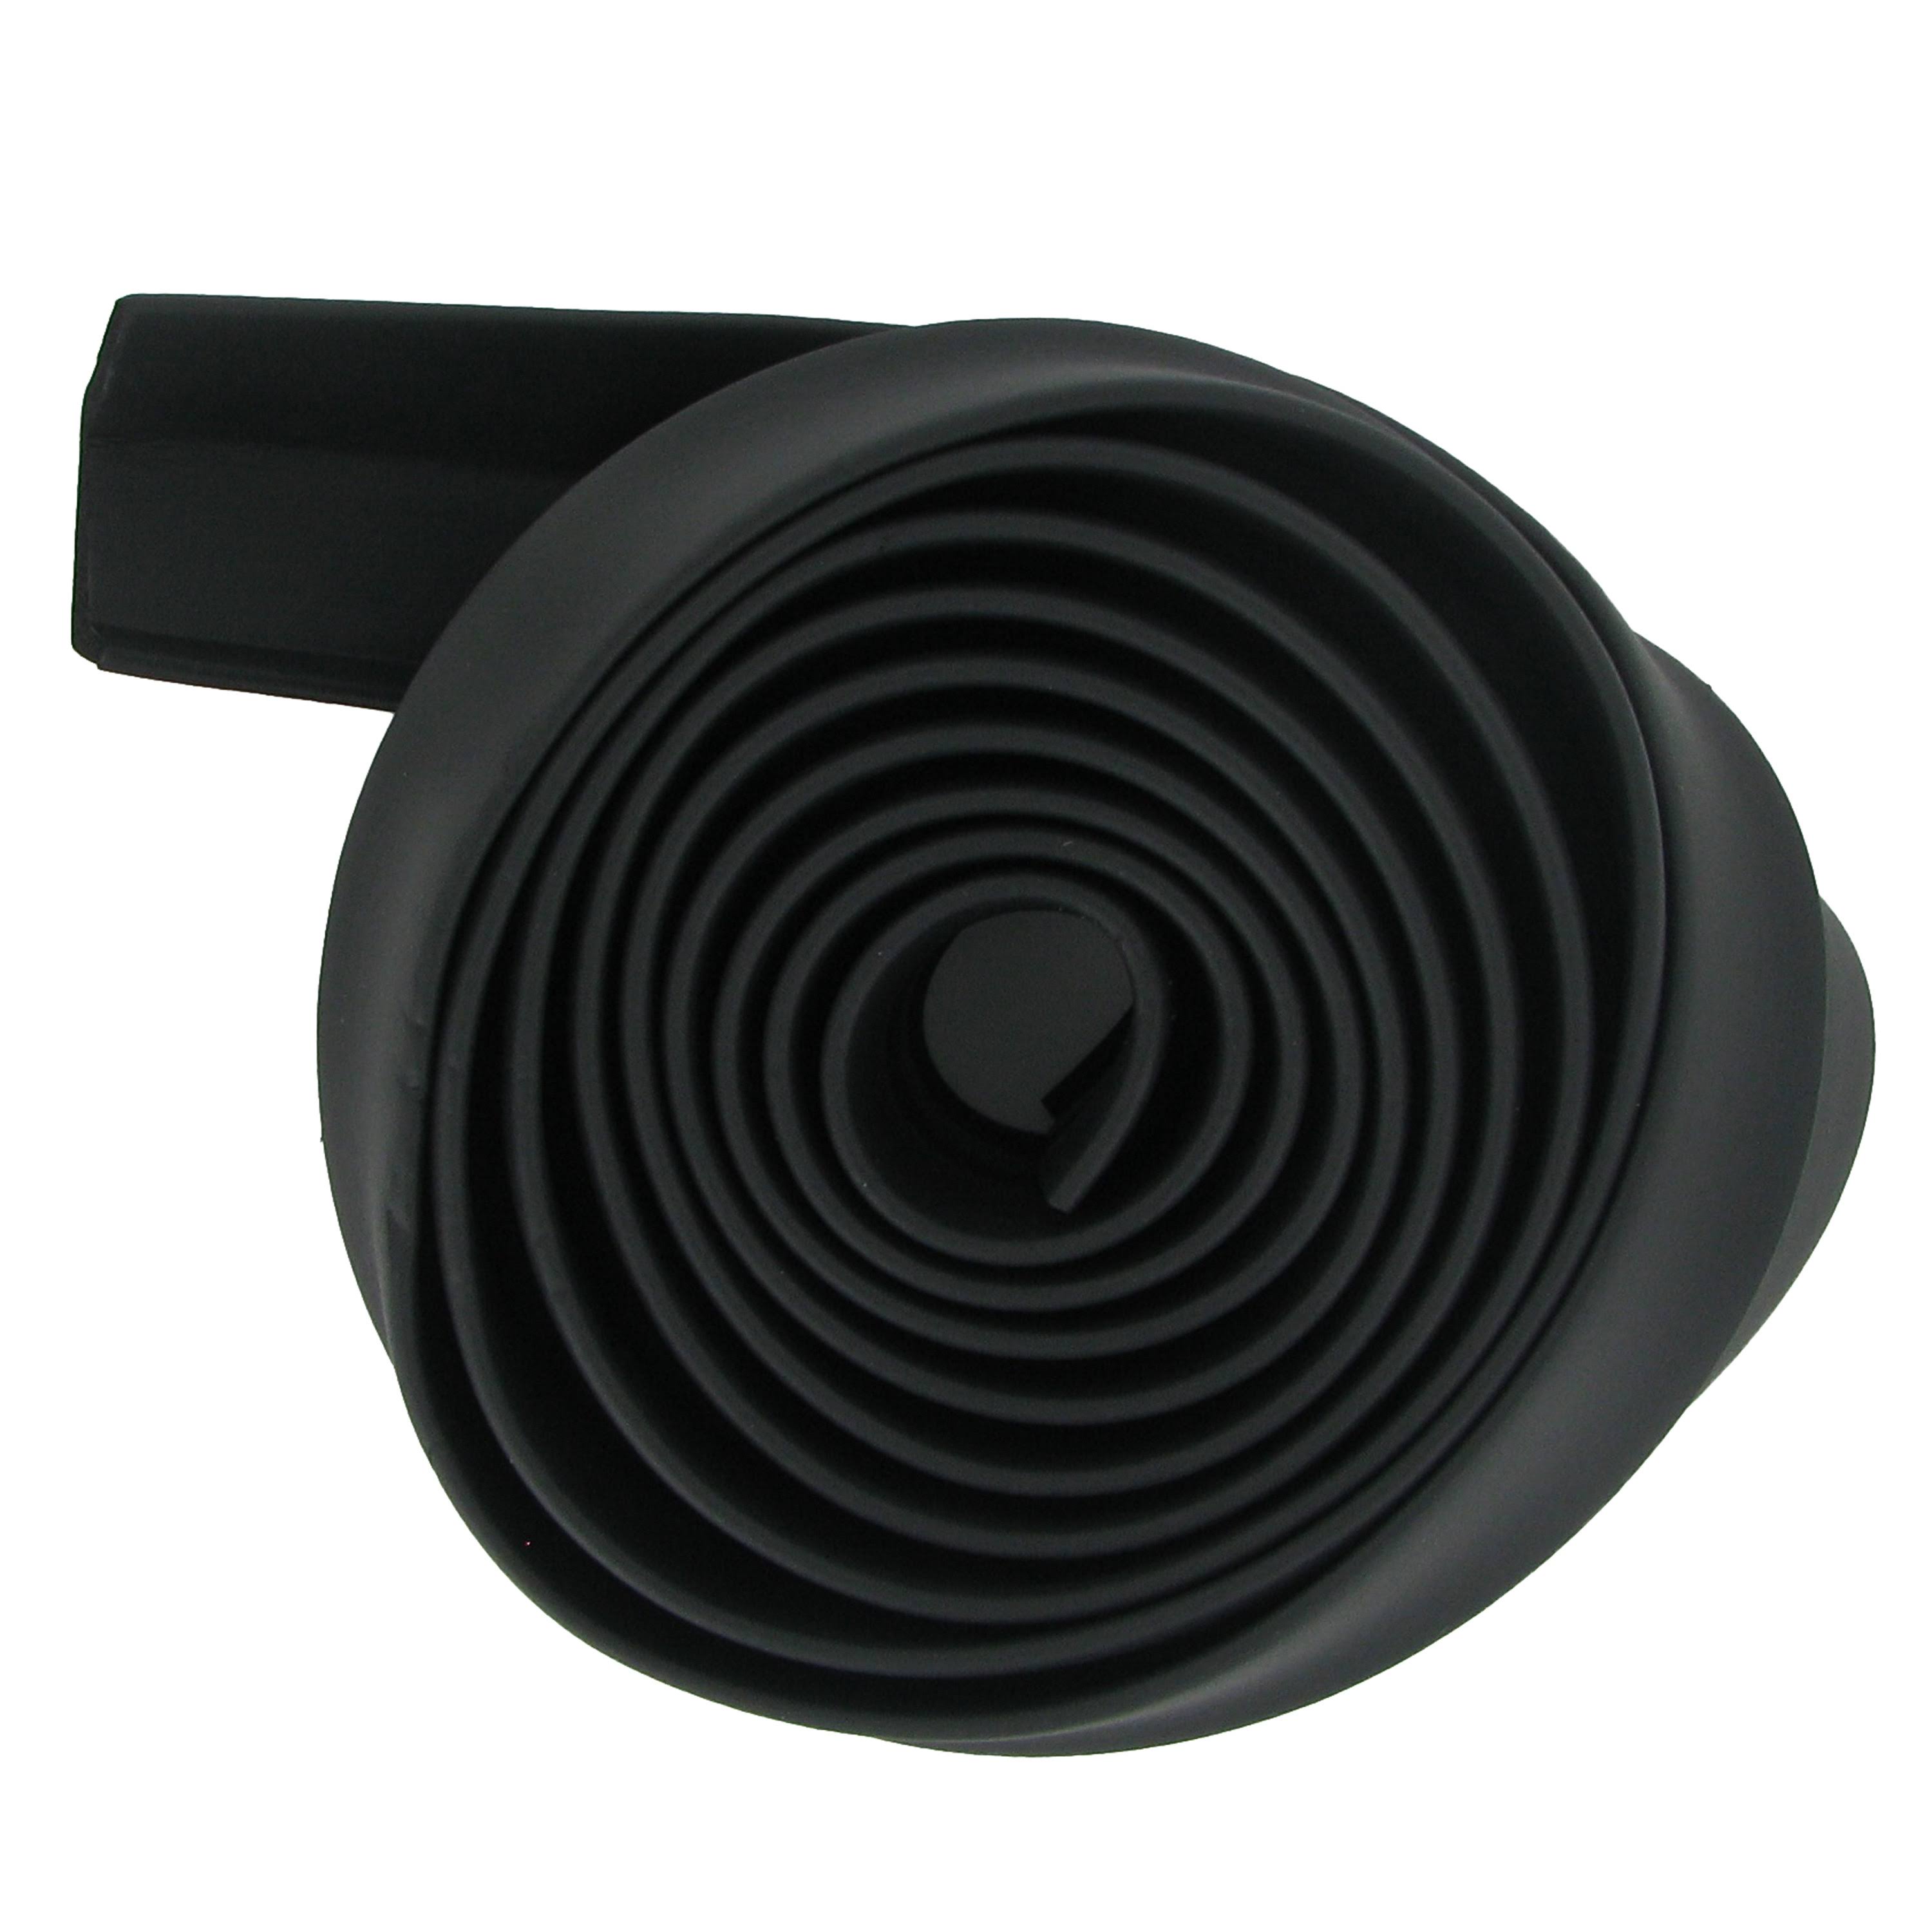 Frost King G9 Nail On Rubber Garage Door Bottom Seal - 2 1/4" x 9', Black